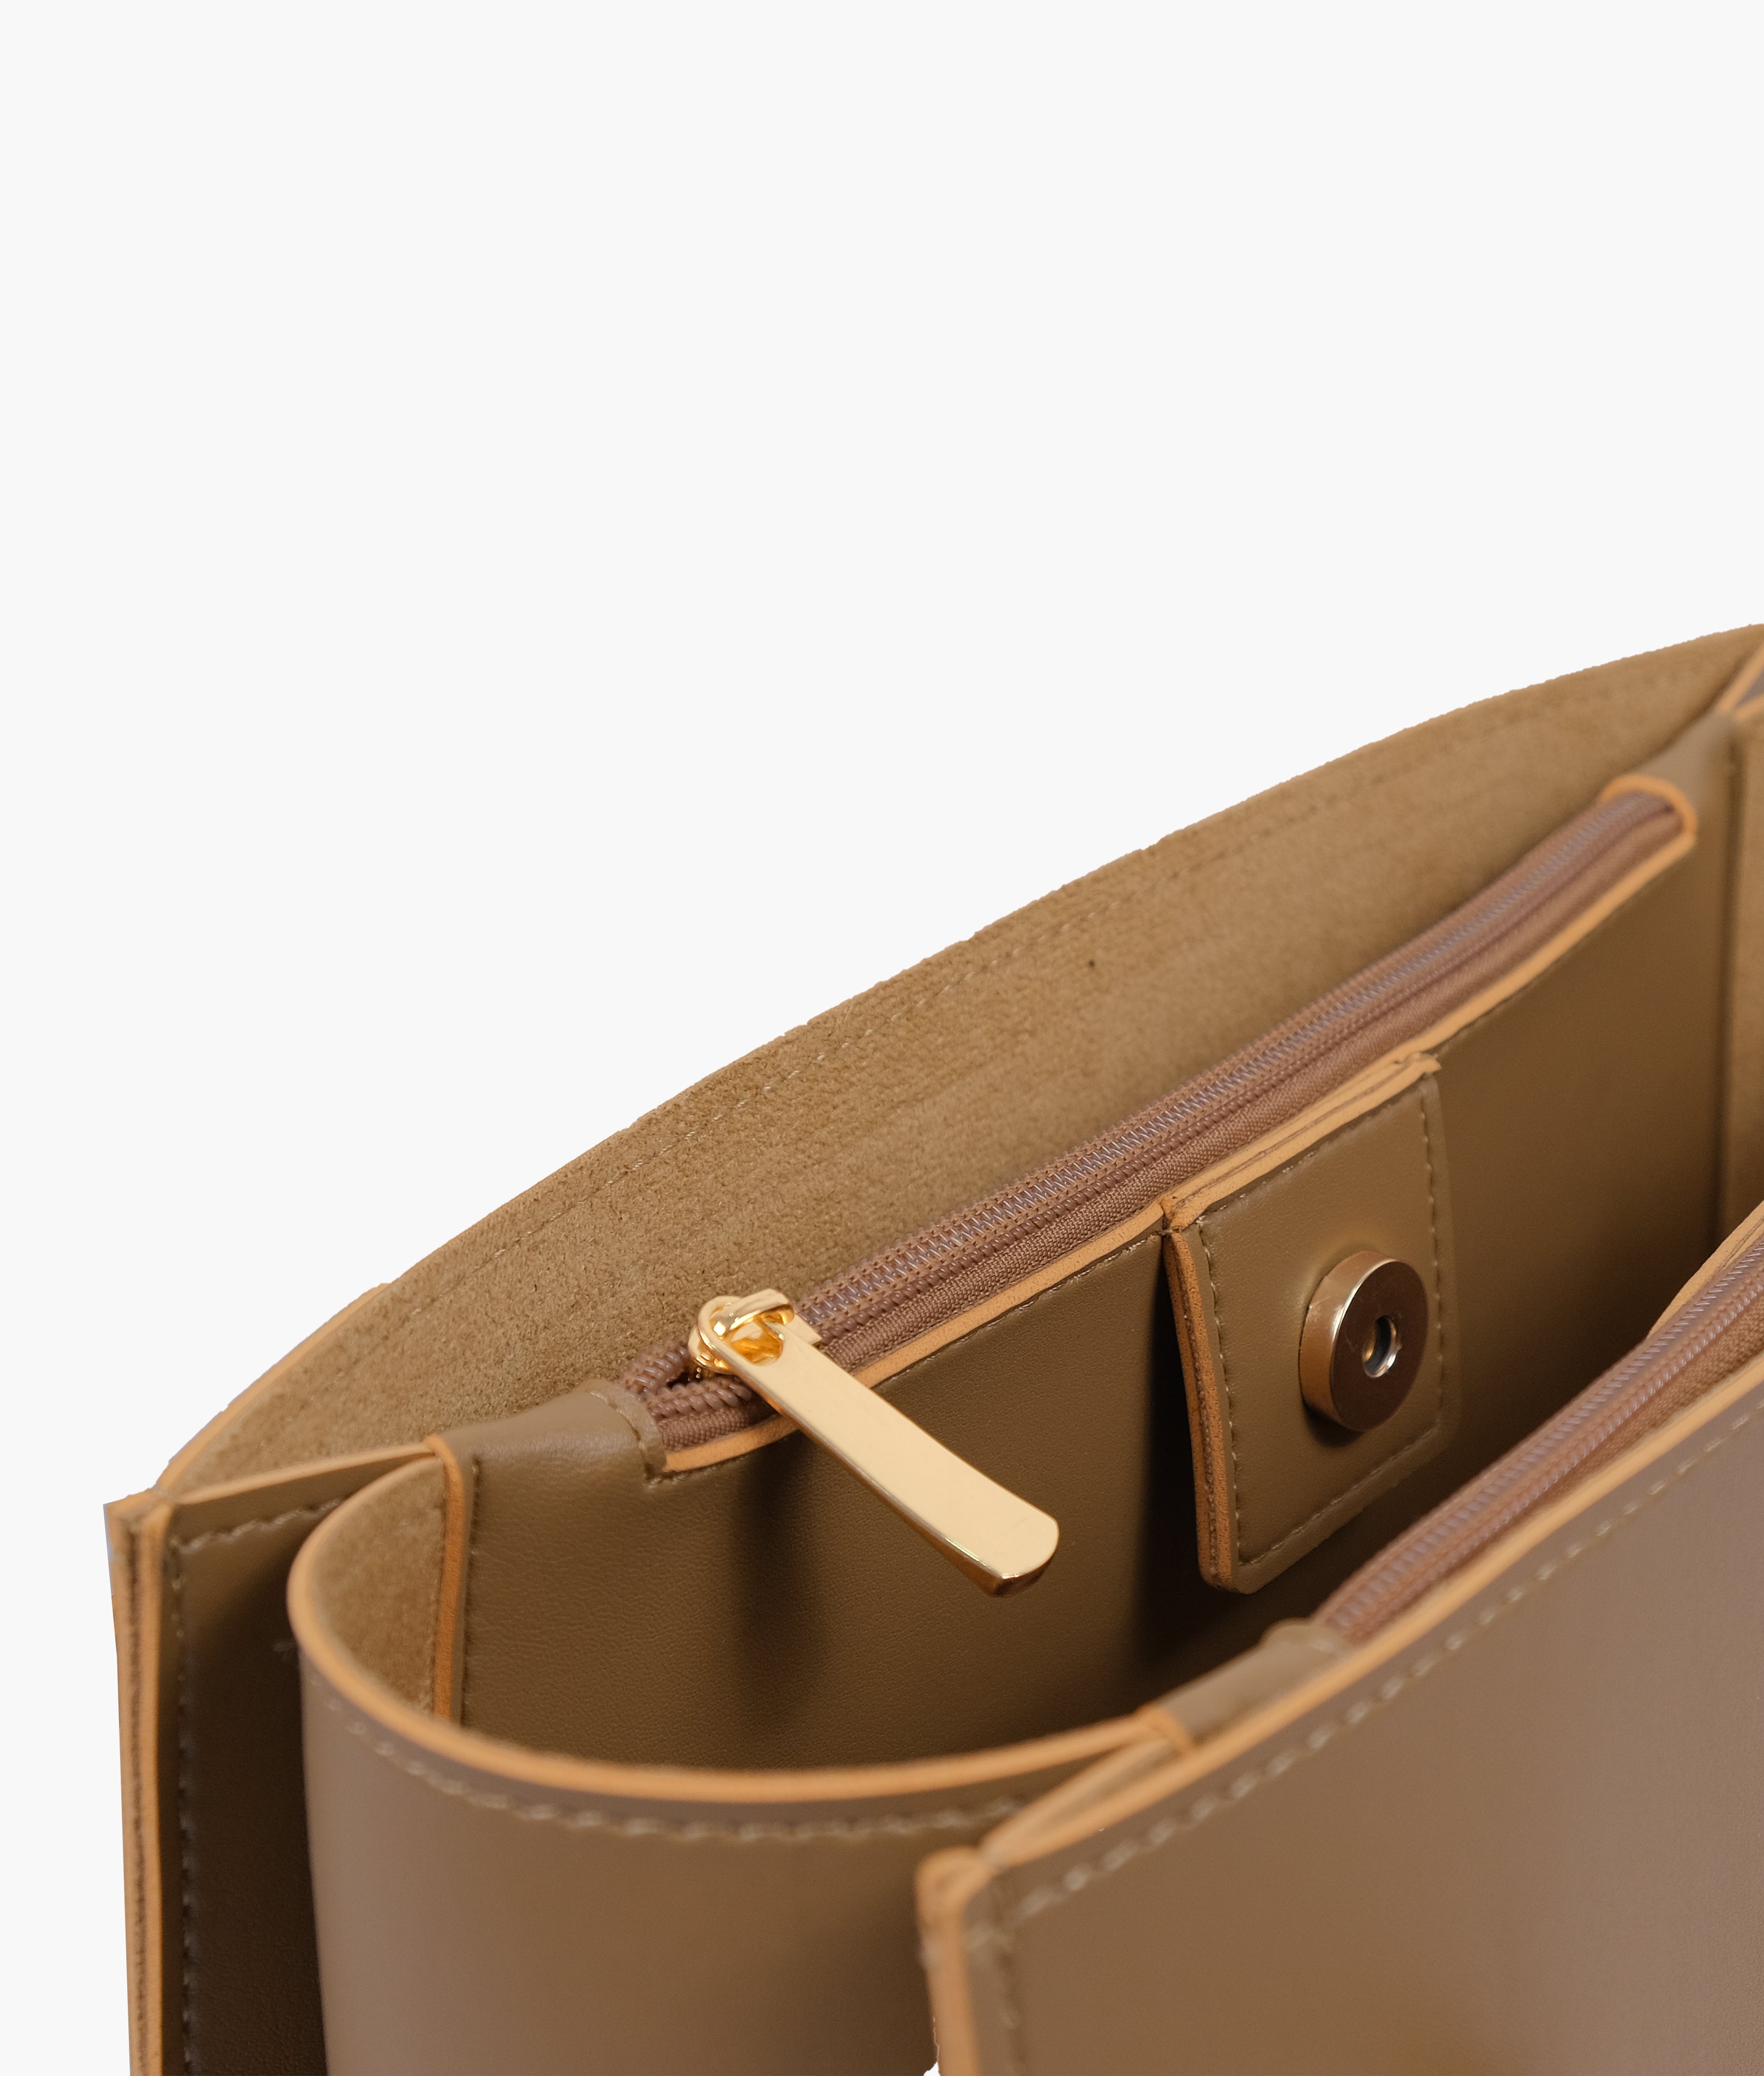 Coffee zipper shoulder bag with long handle